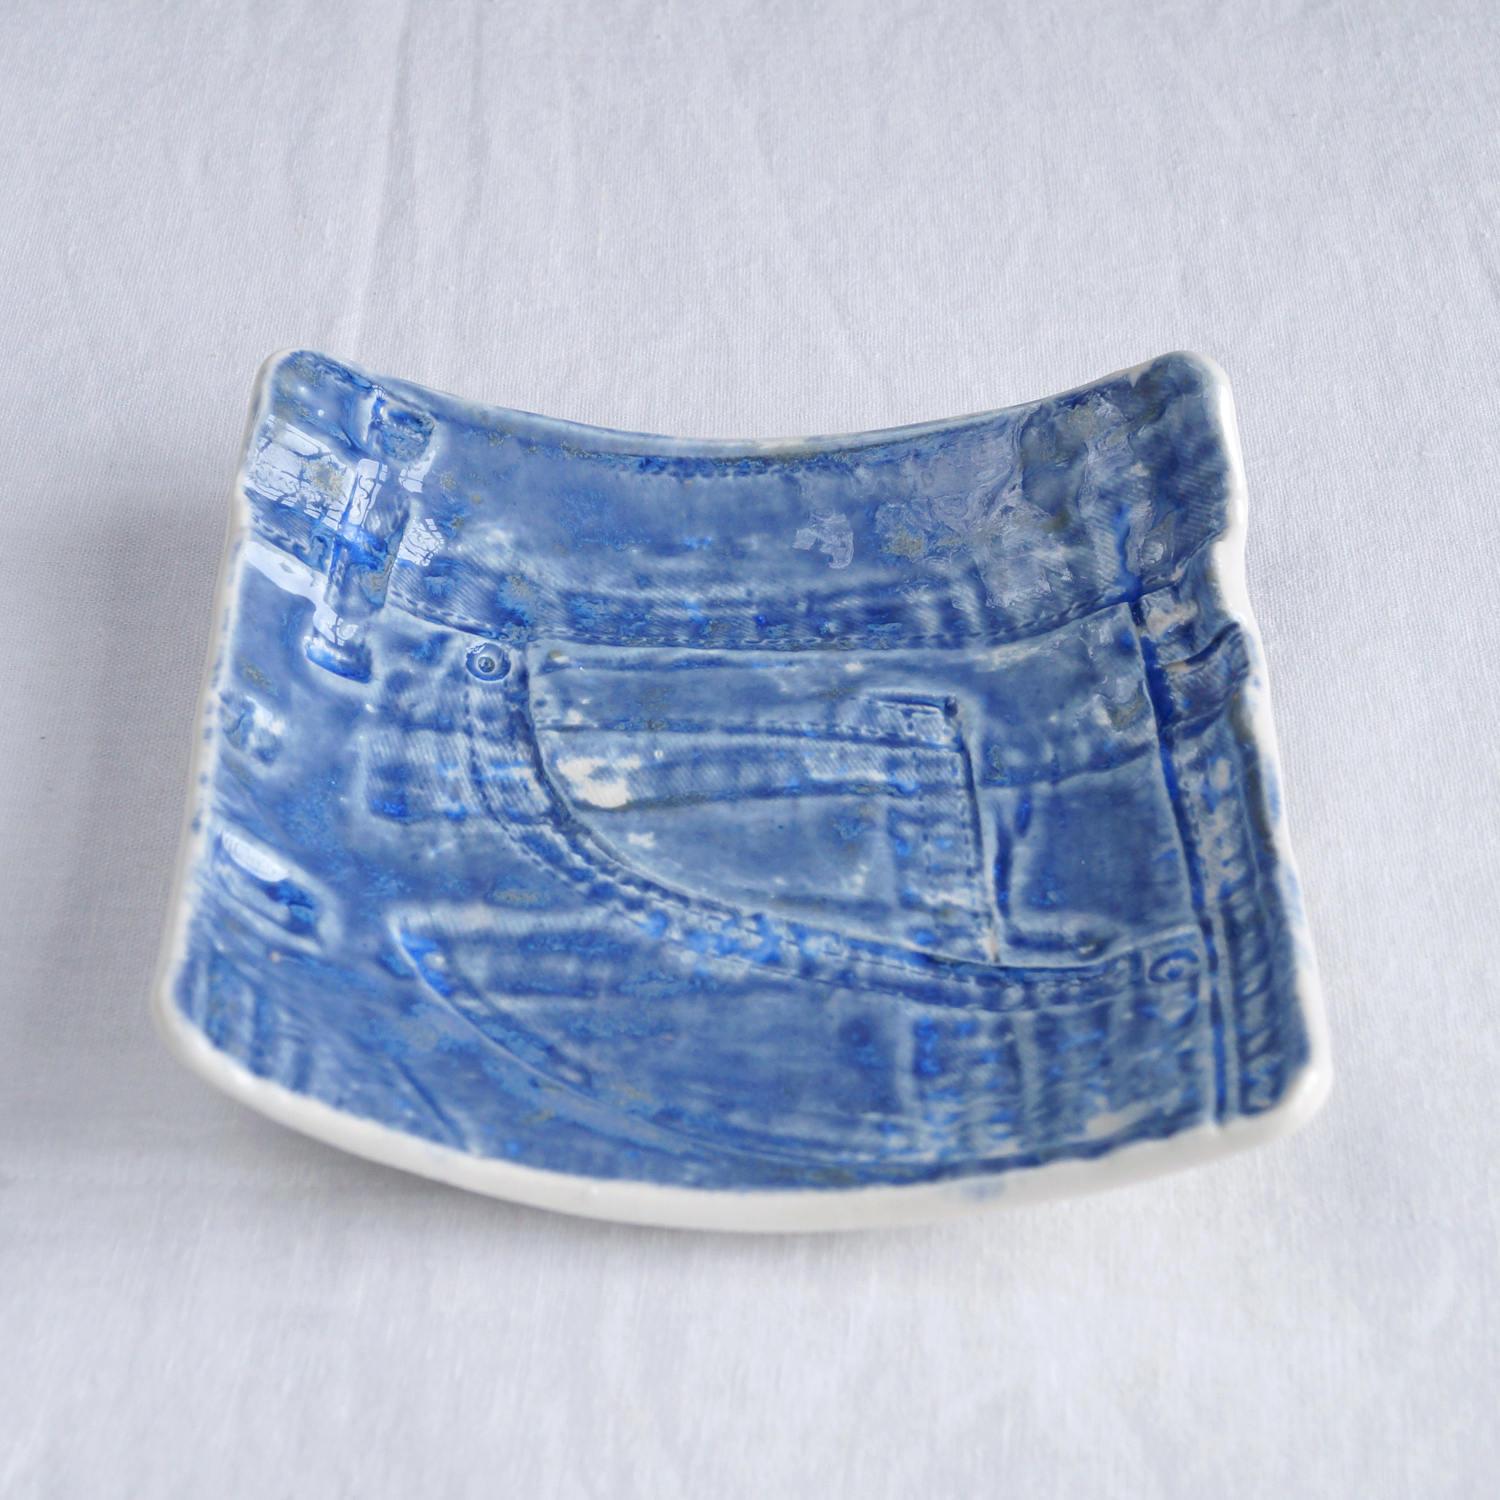 JEANS bowl, ceramic coin bowl, white porcelain, blue denim, Vanillakiln, UK, ceramic man bowl, square ceramic bowl, 